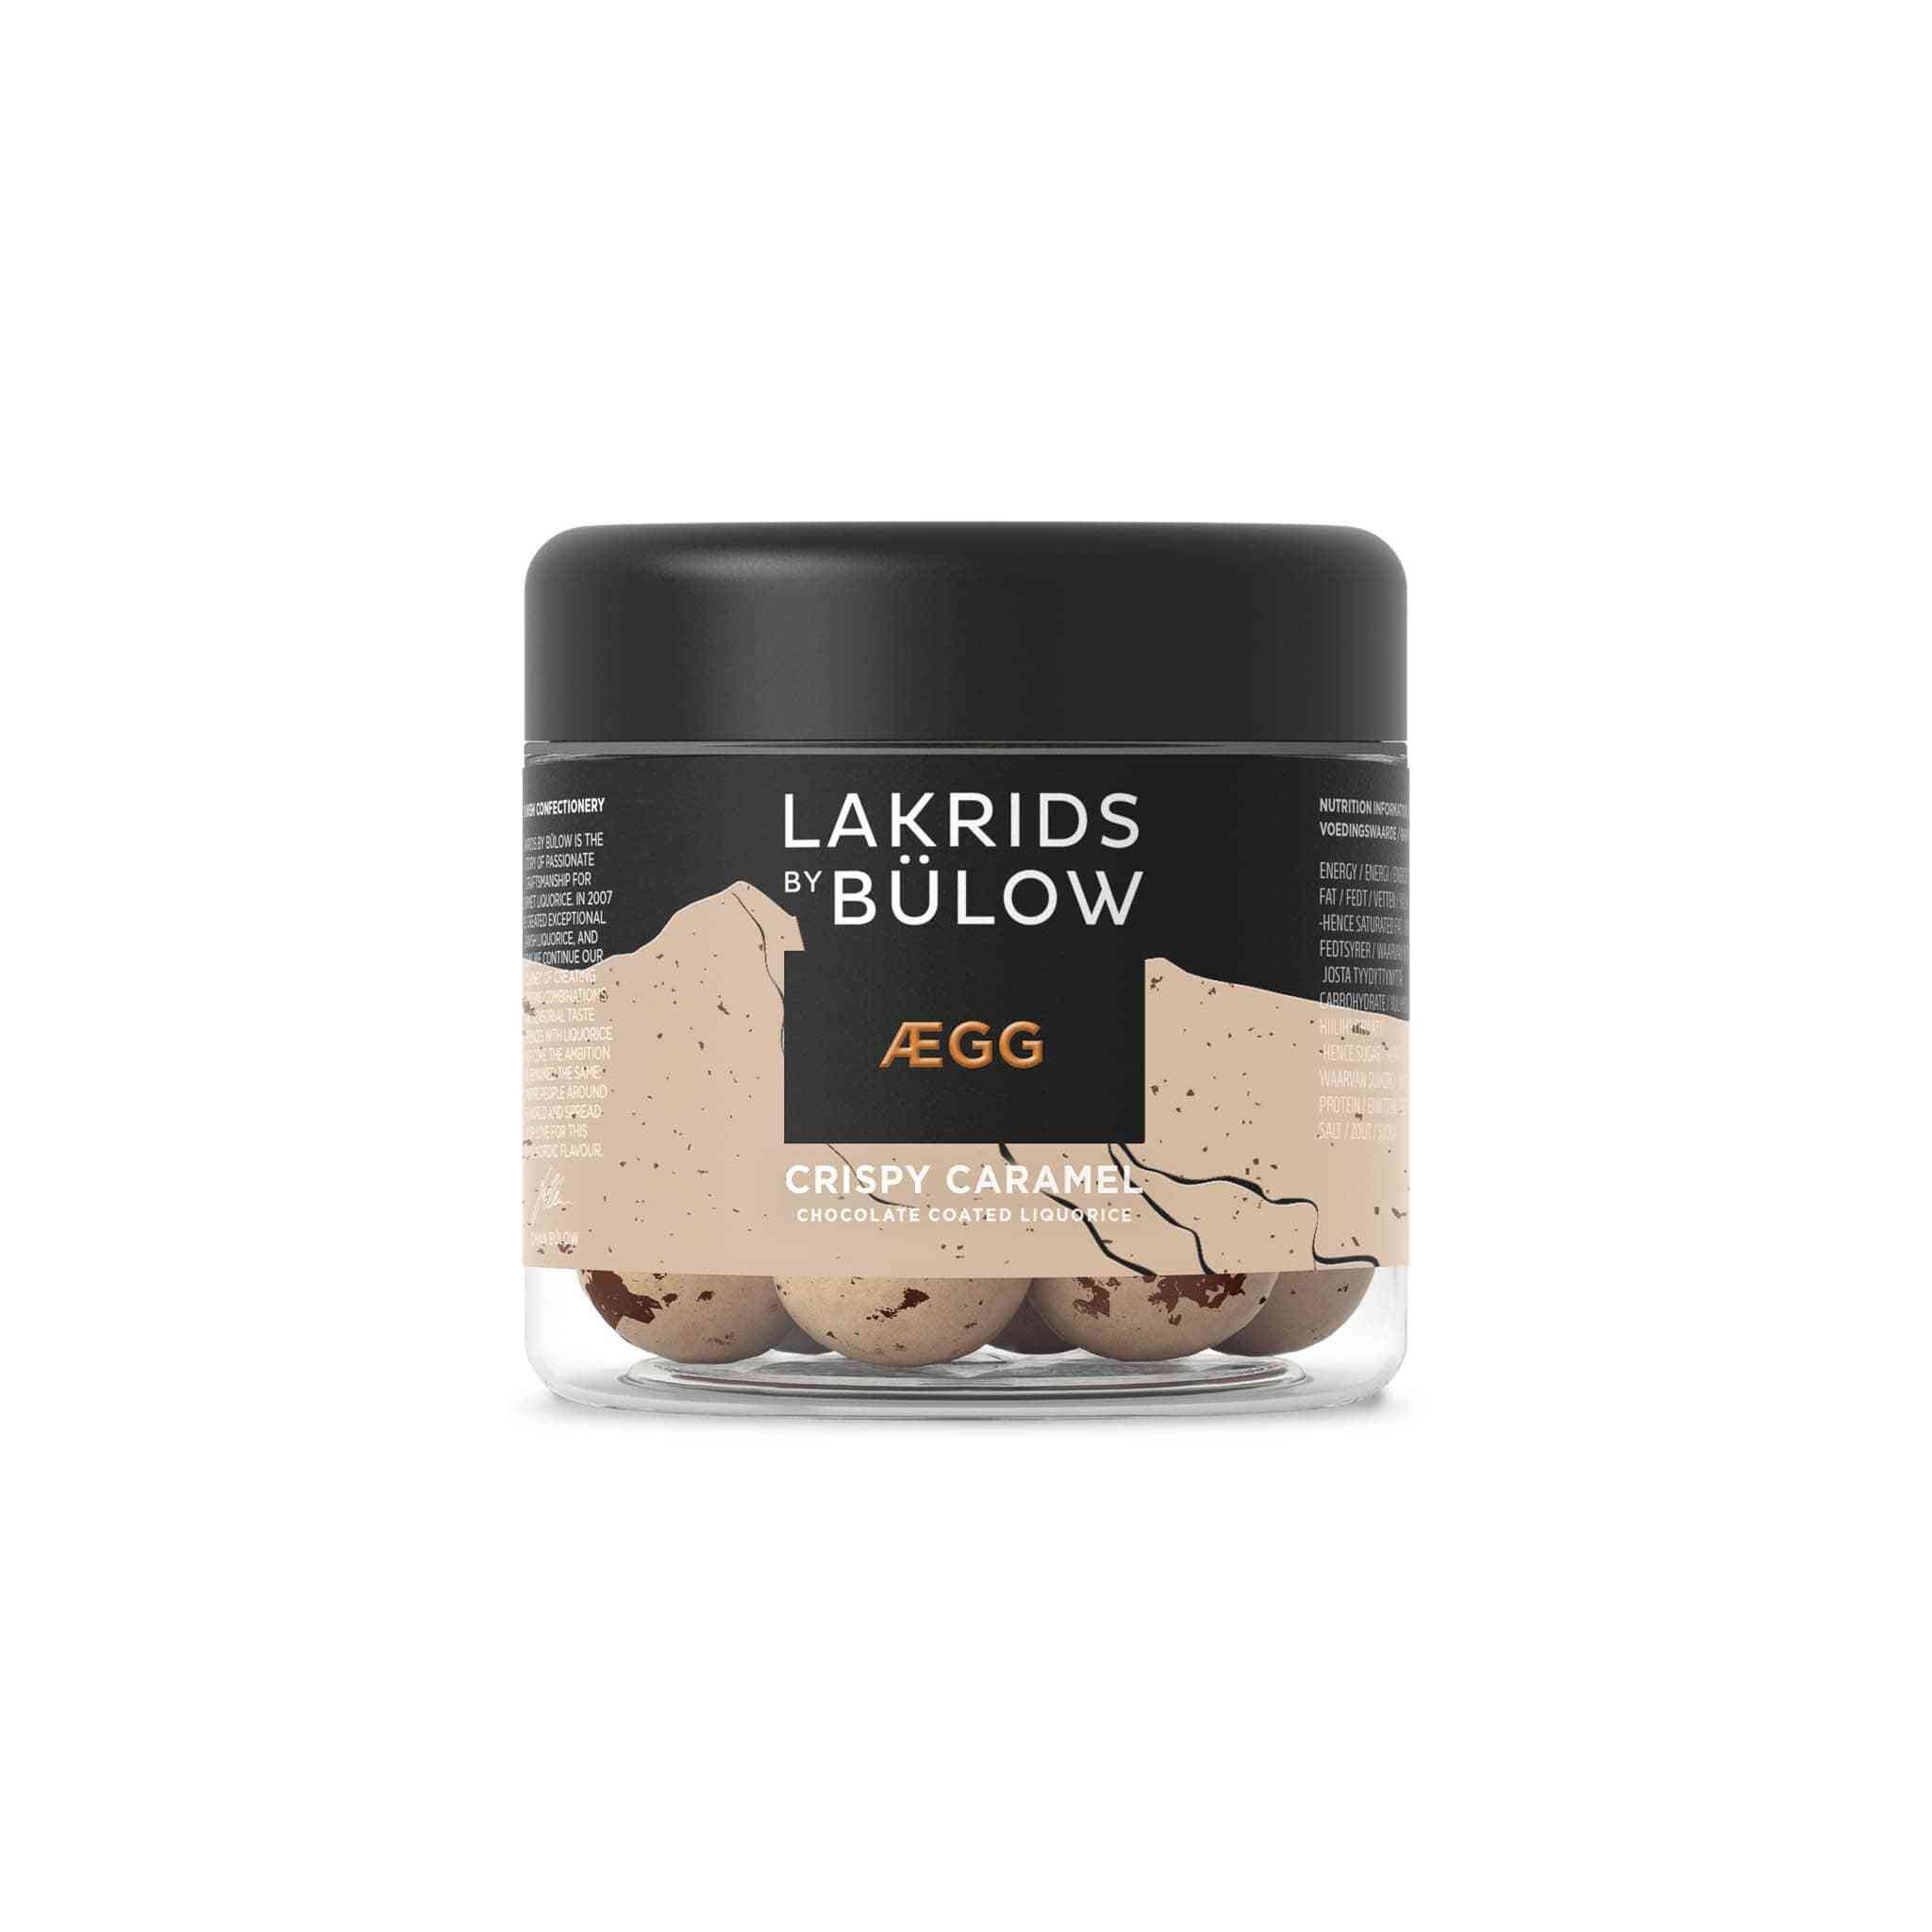 Lakrids AEGG Crispy Caramel Chocolate Coated Liquorice